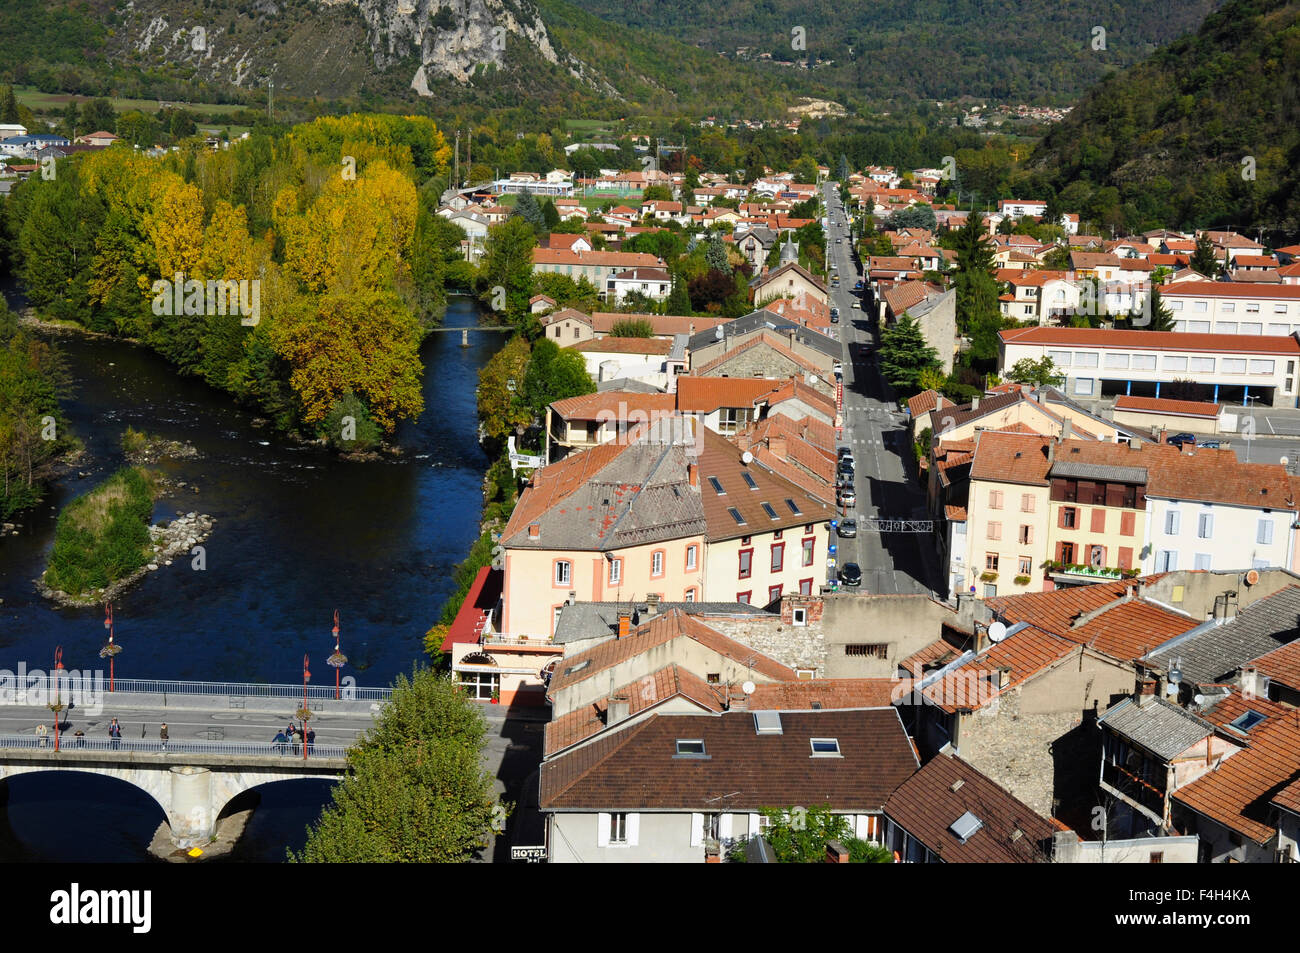 River Ariege running through the town of Tarascon, Ariege, Midi-Pyrenees, France Stock Photo